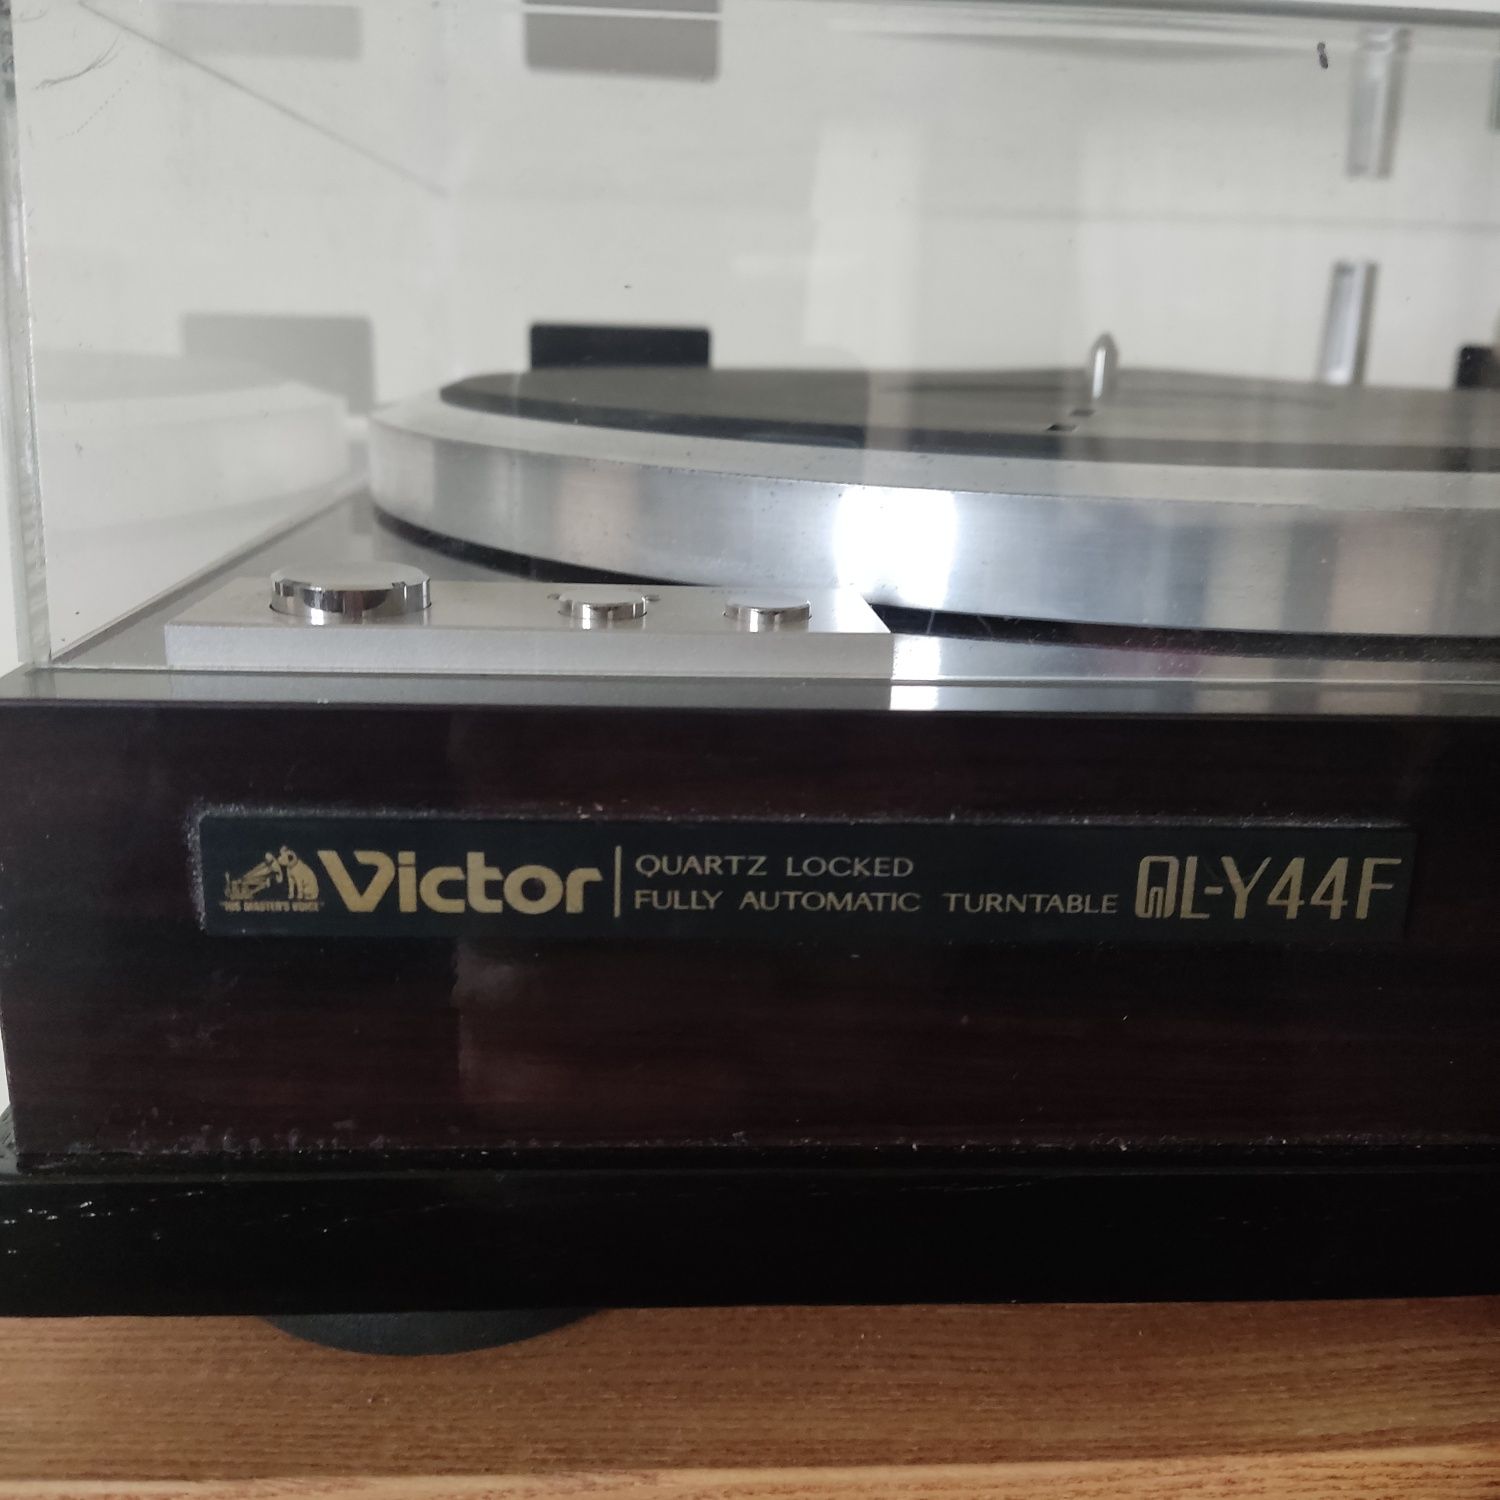 Gramofon JVC Victor QL-Y44F hiend thorens pioneer ortofon